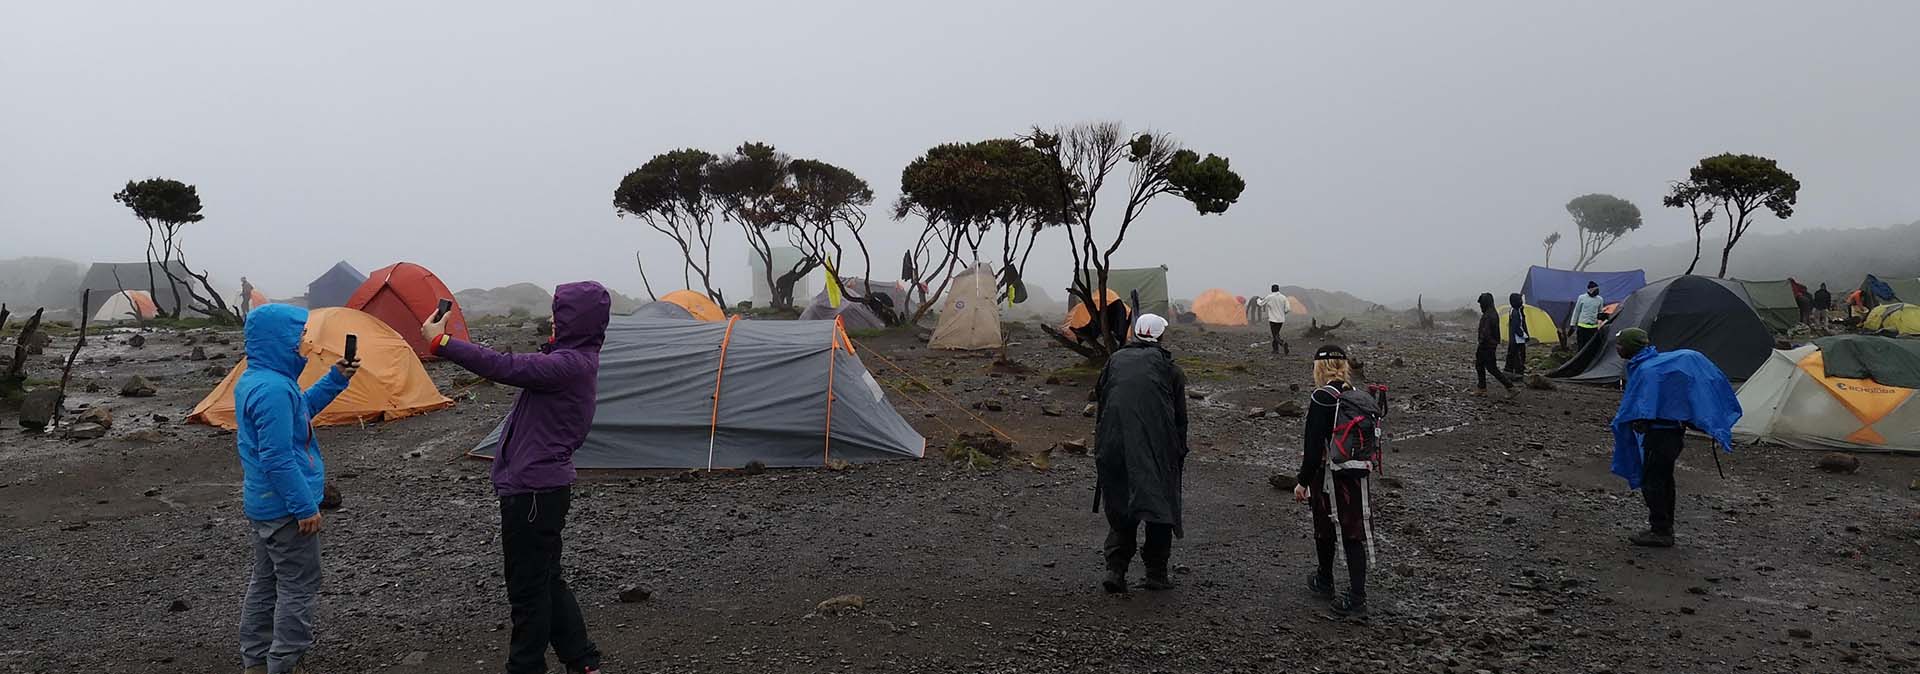 Altitude Sickness on Mount Kilimanjaro